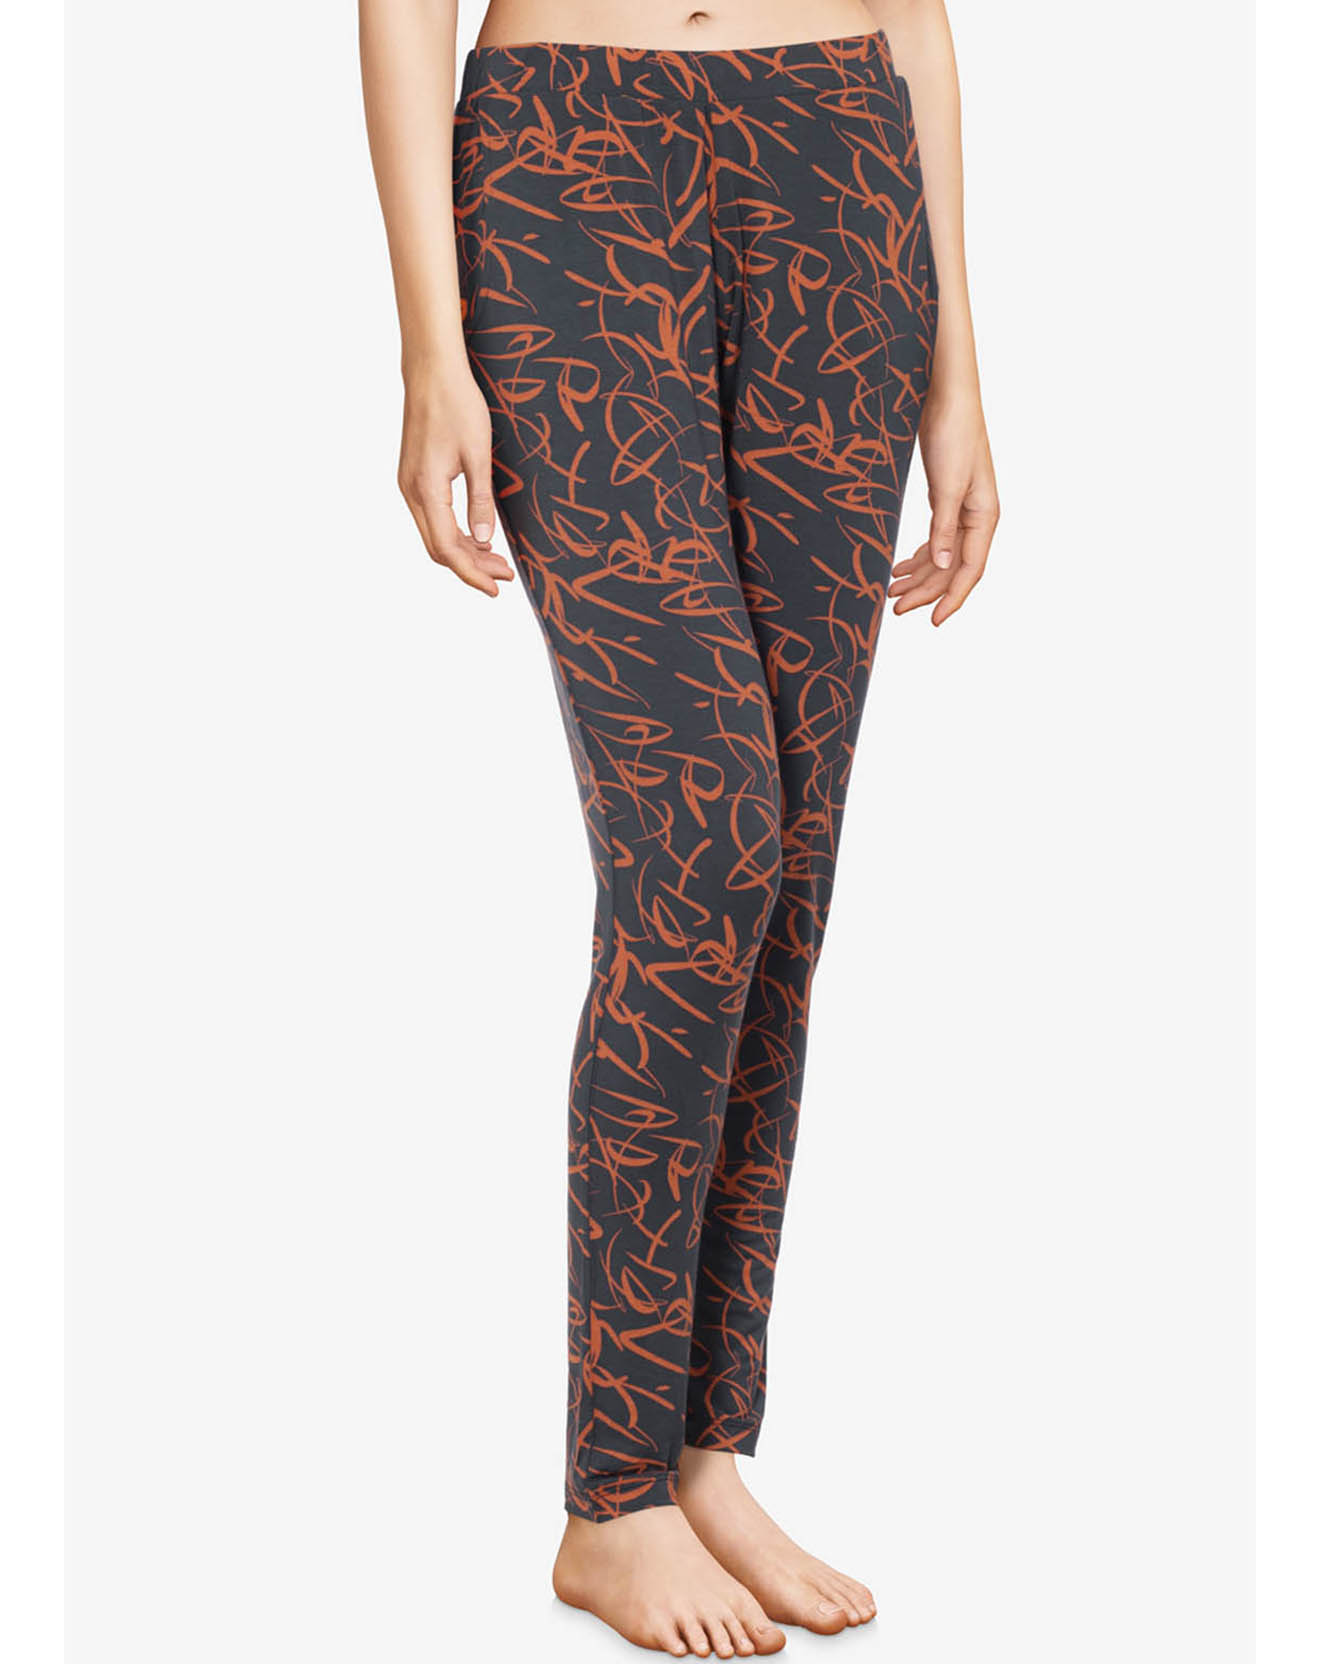 femilet - pantalon de pyjama volcano imprimé noir/orange